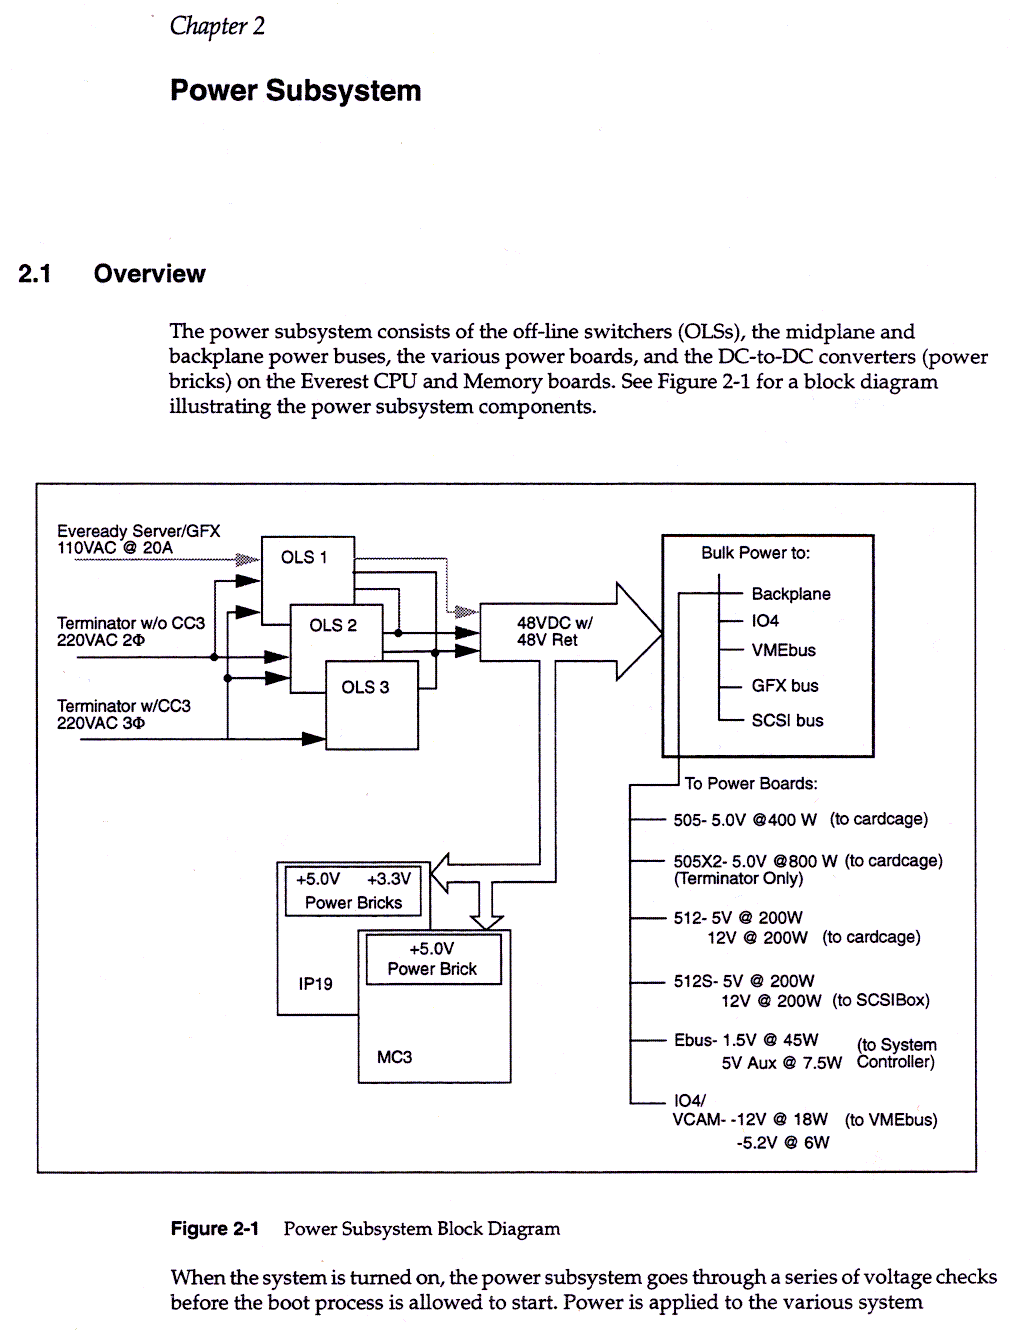 Power Subsystem, 2-1